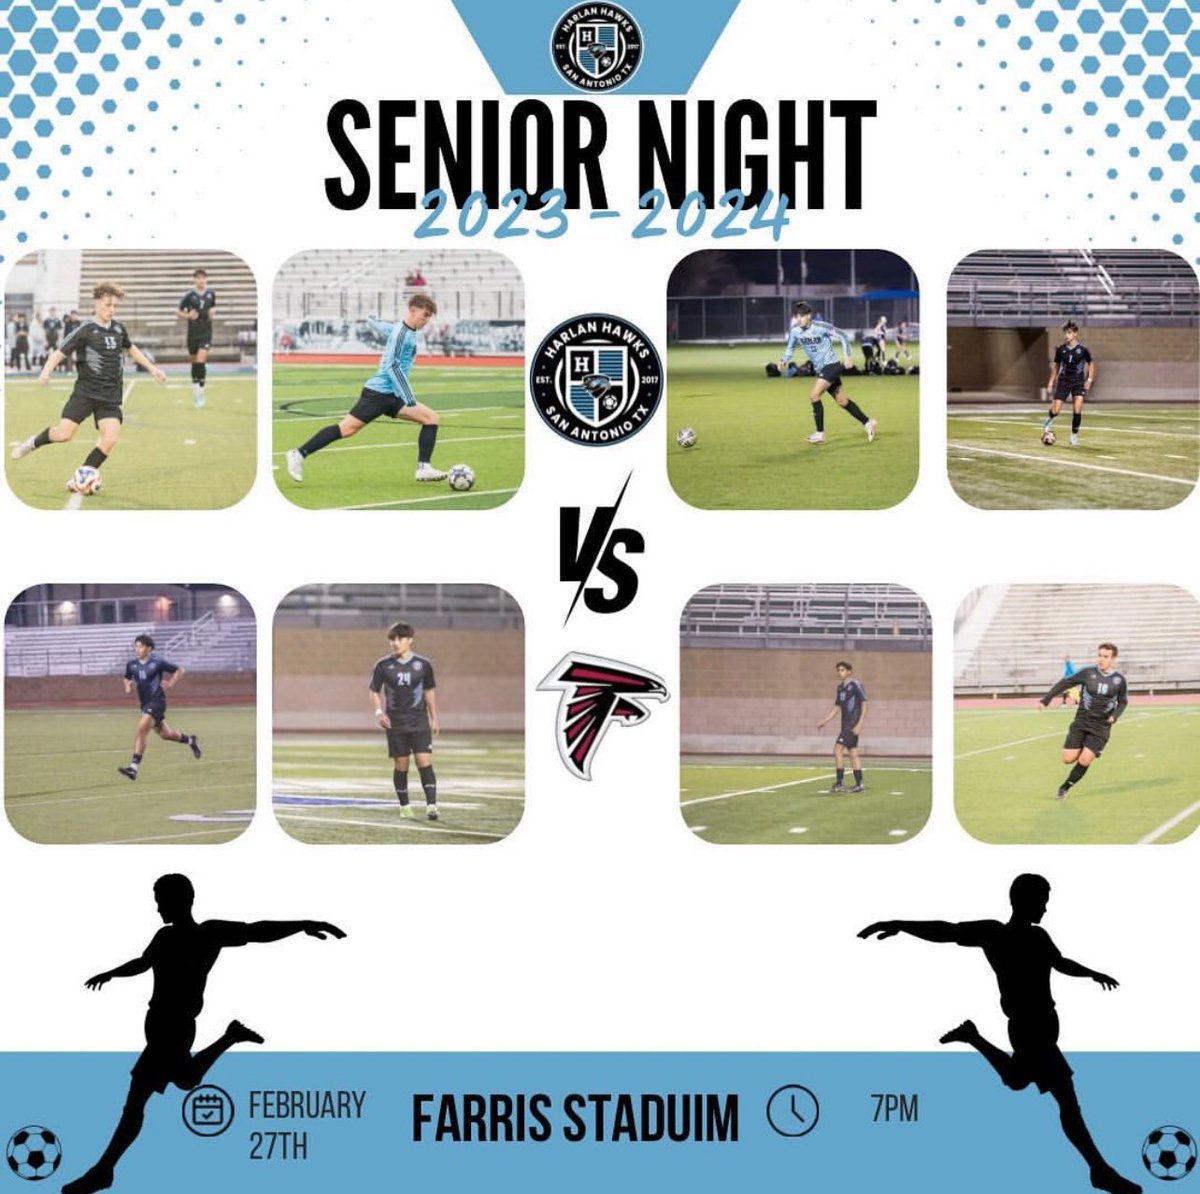 Senior Night 👨🏻‍🎓 for our Harlan/BVB boys tonight at 7:00pm at Farris! Come out & support.⚽️@HarlanSoccer @litosBVBIASA @RileyMcNamara05 @SamAllen06 @Carlos06Luna @alee_vargasss & Hugo